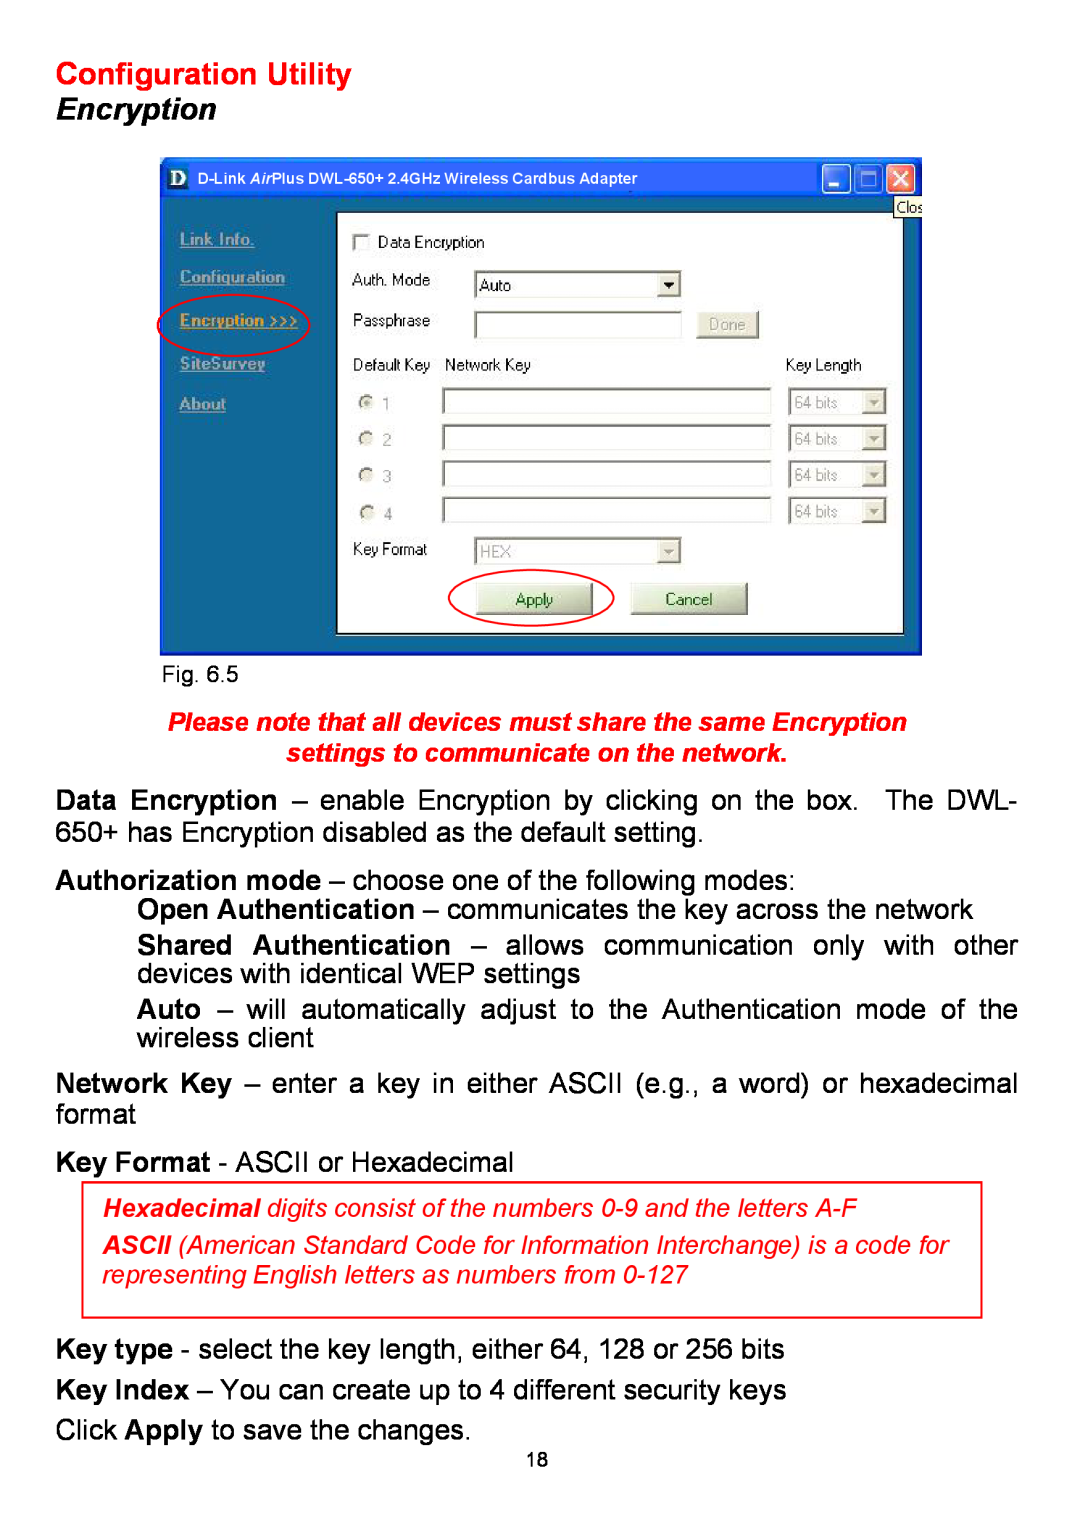 D-Link DWL-650+ manual Encryption, Configuration Utility 